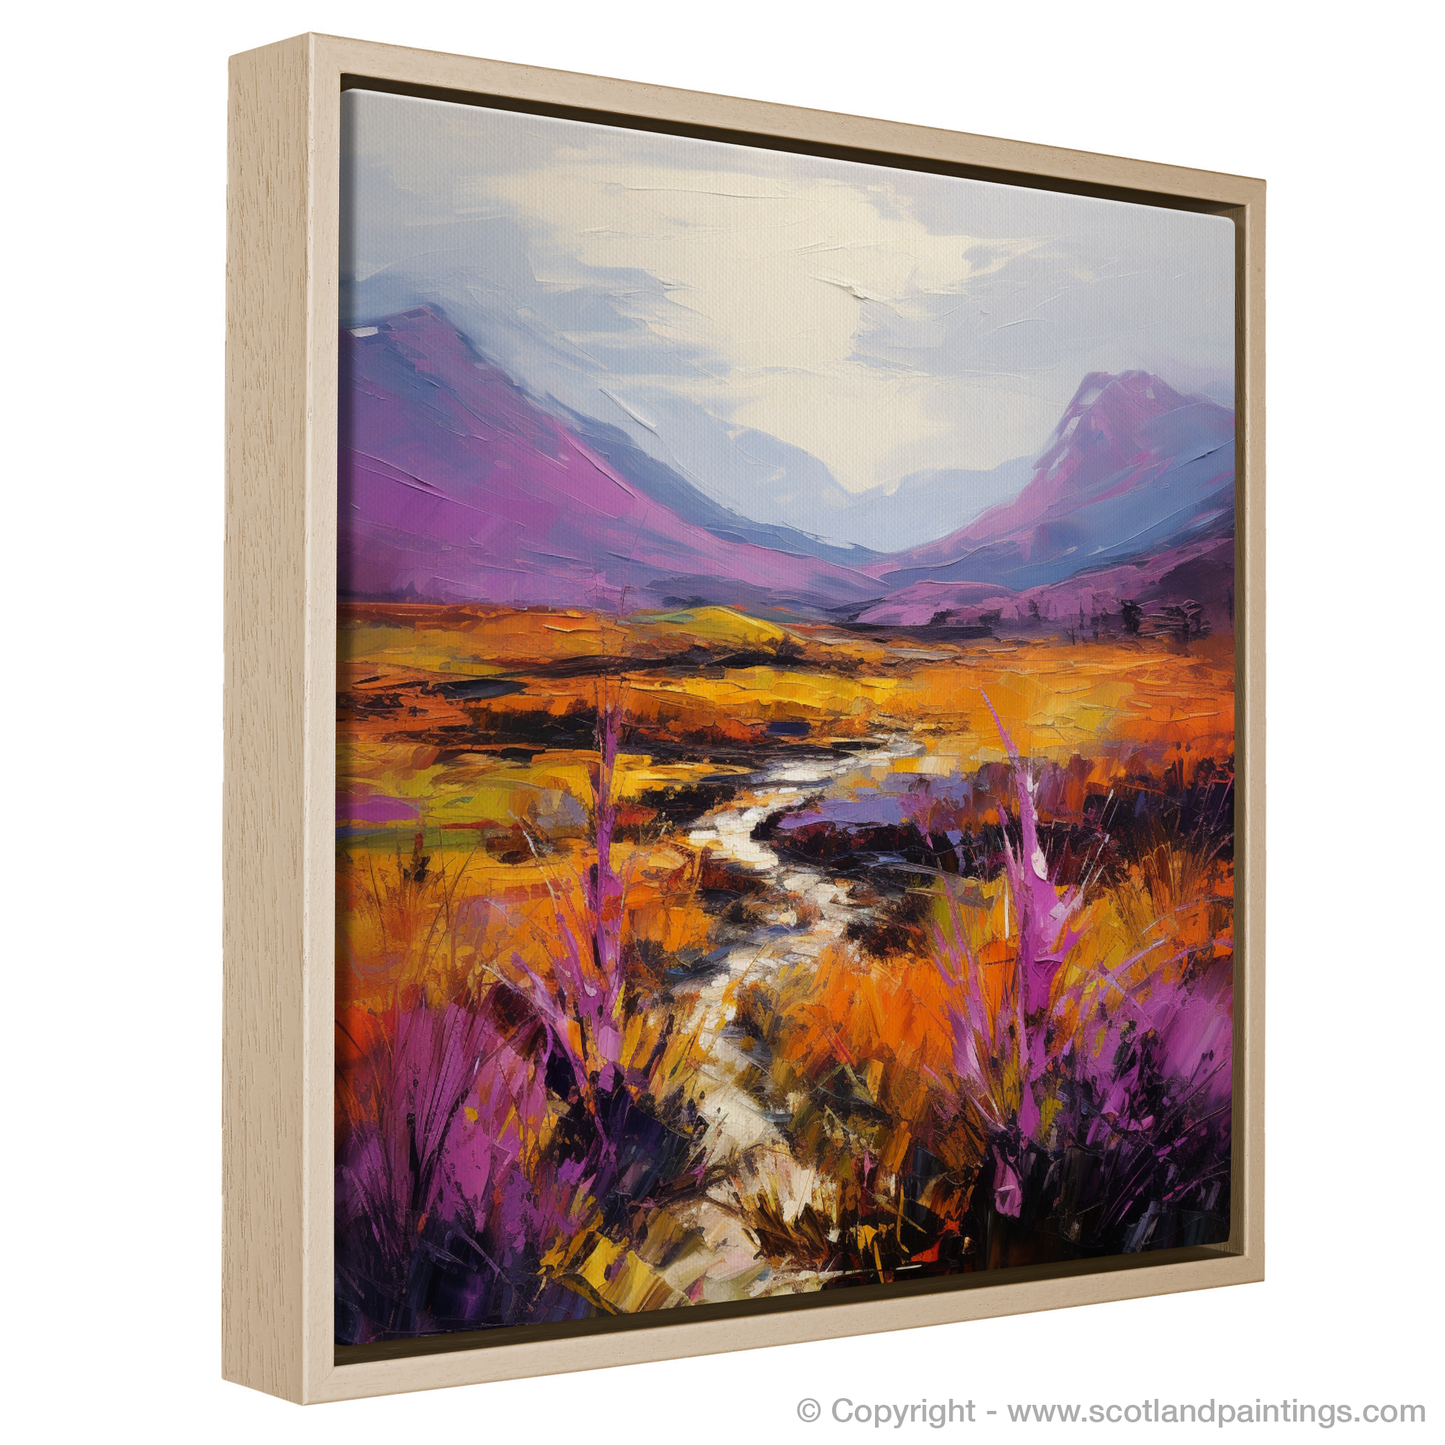 Painting and Art Print of Purple heather in Glencoe entitled "Heather Dance in Glencoe".